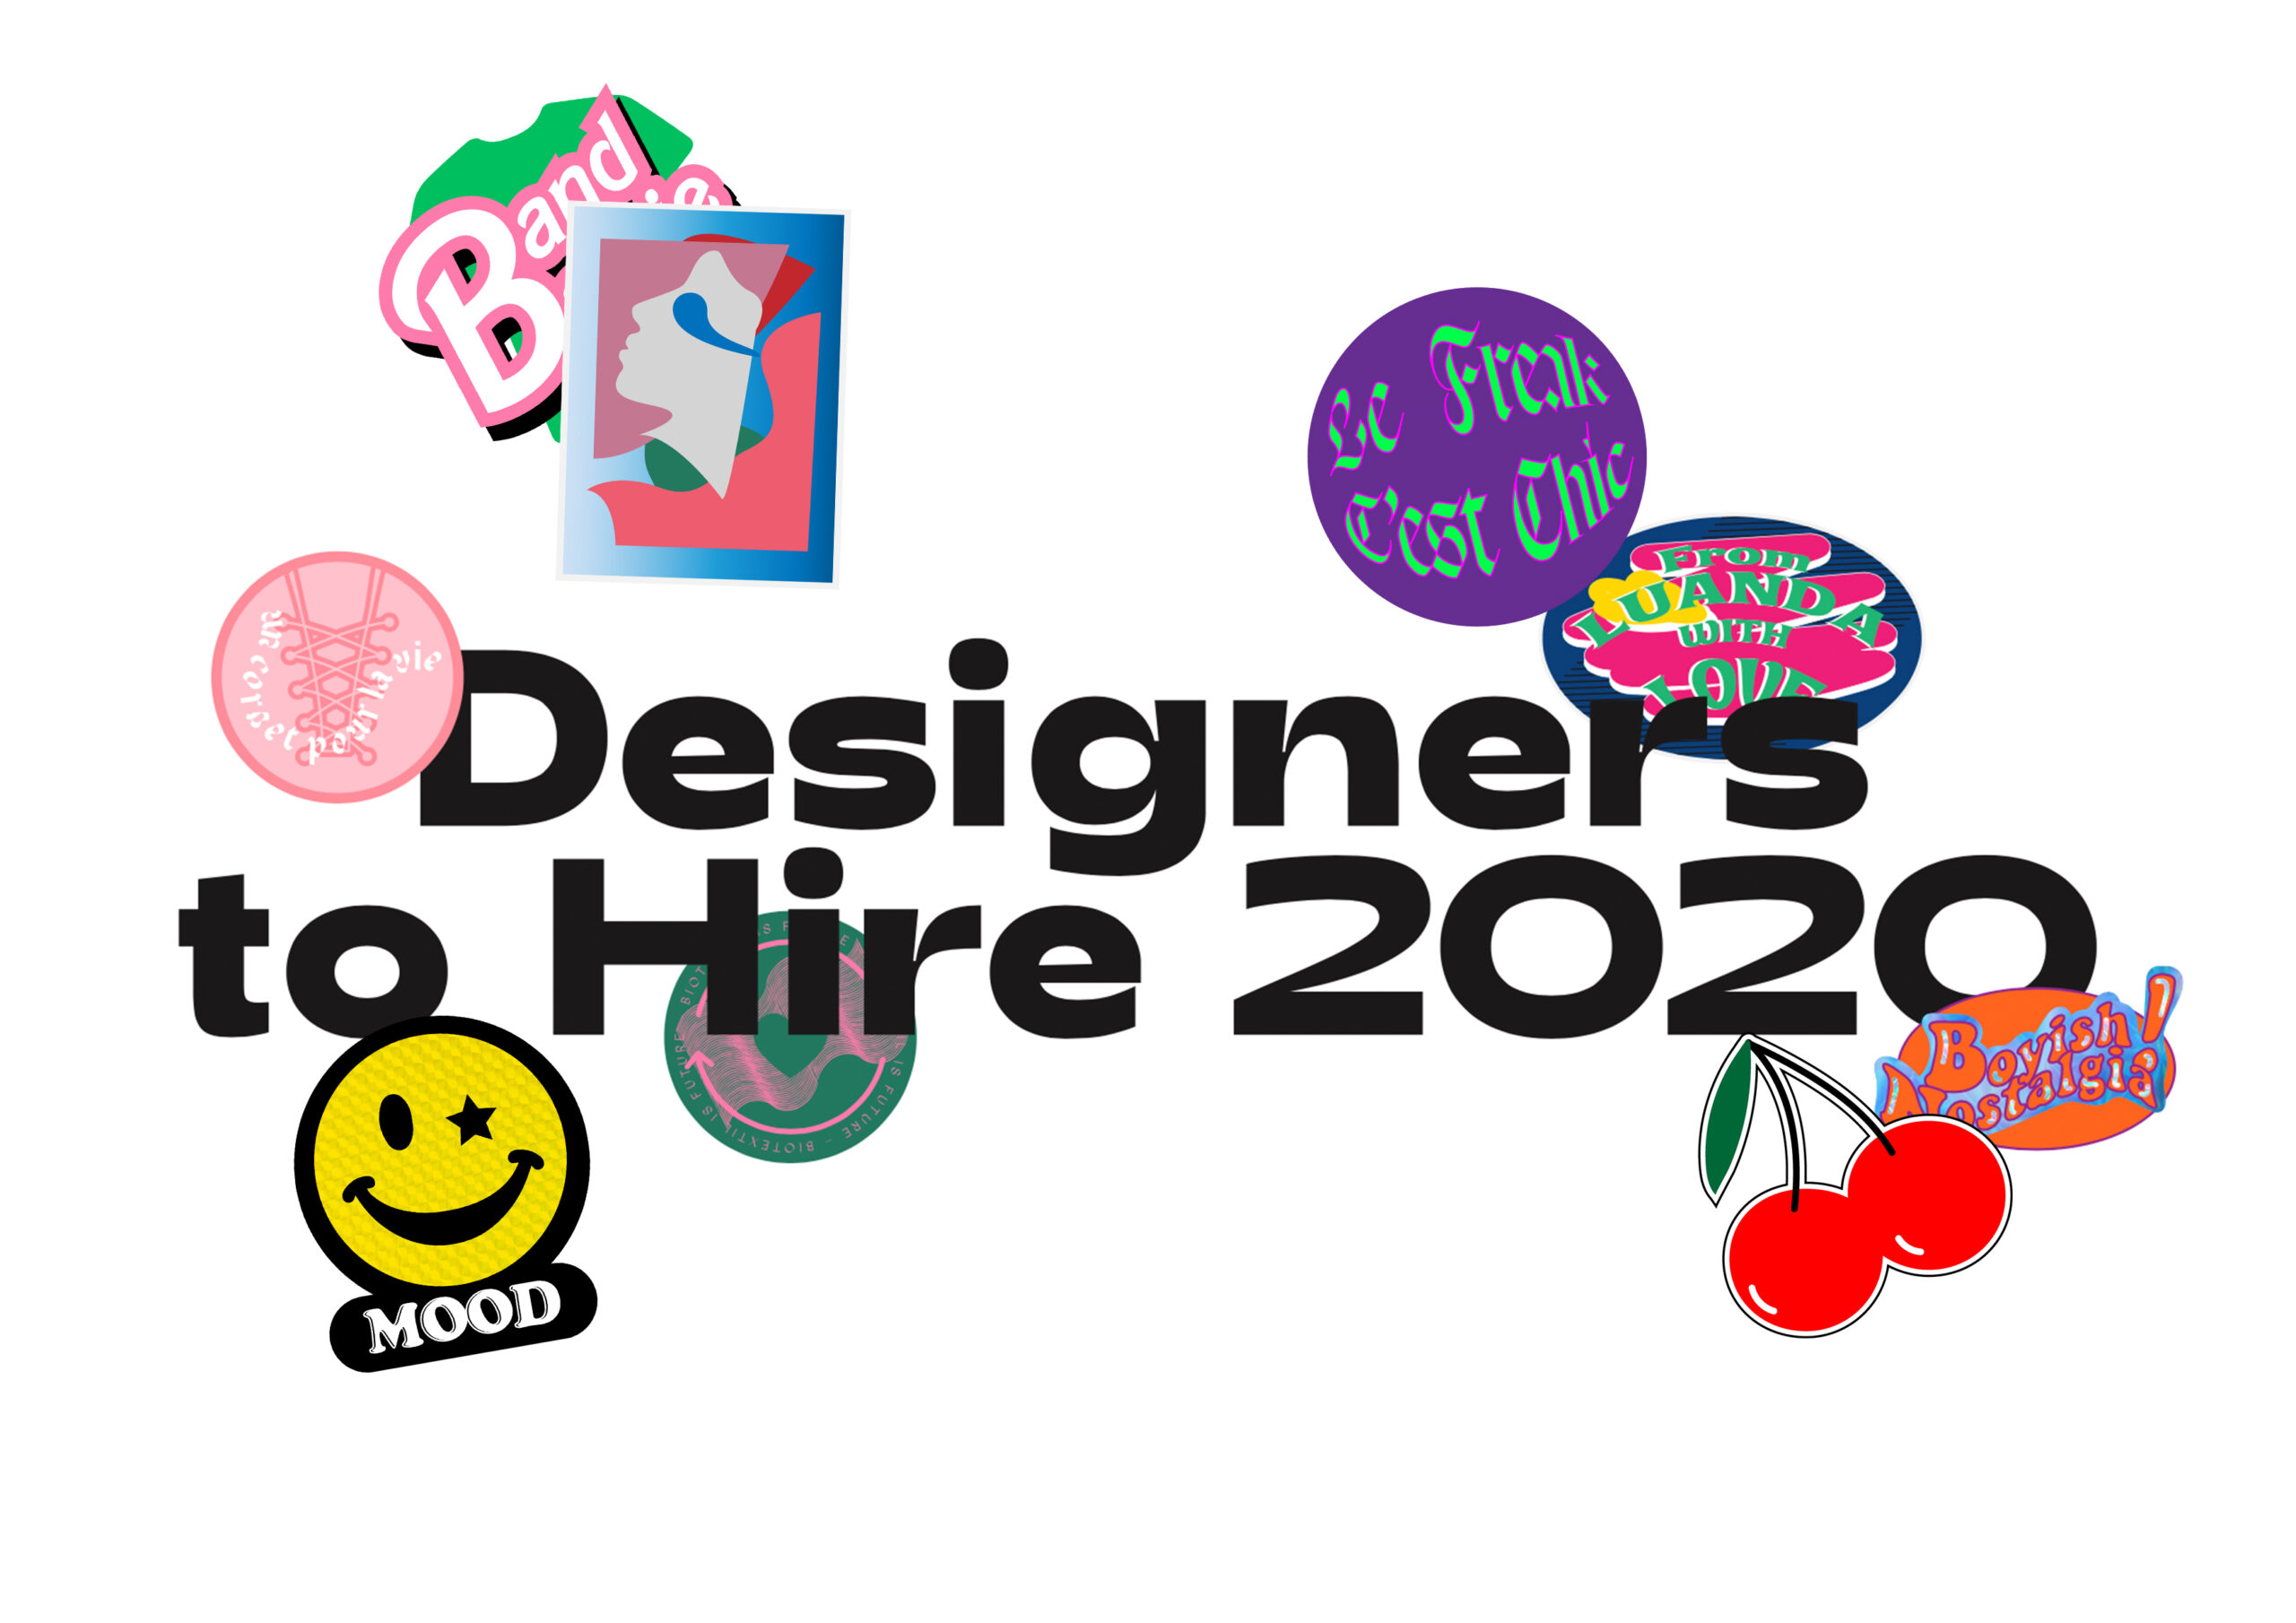 1 Granary x Pinterest: Designers to hire 2020